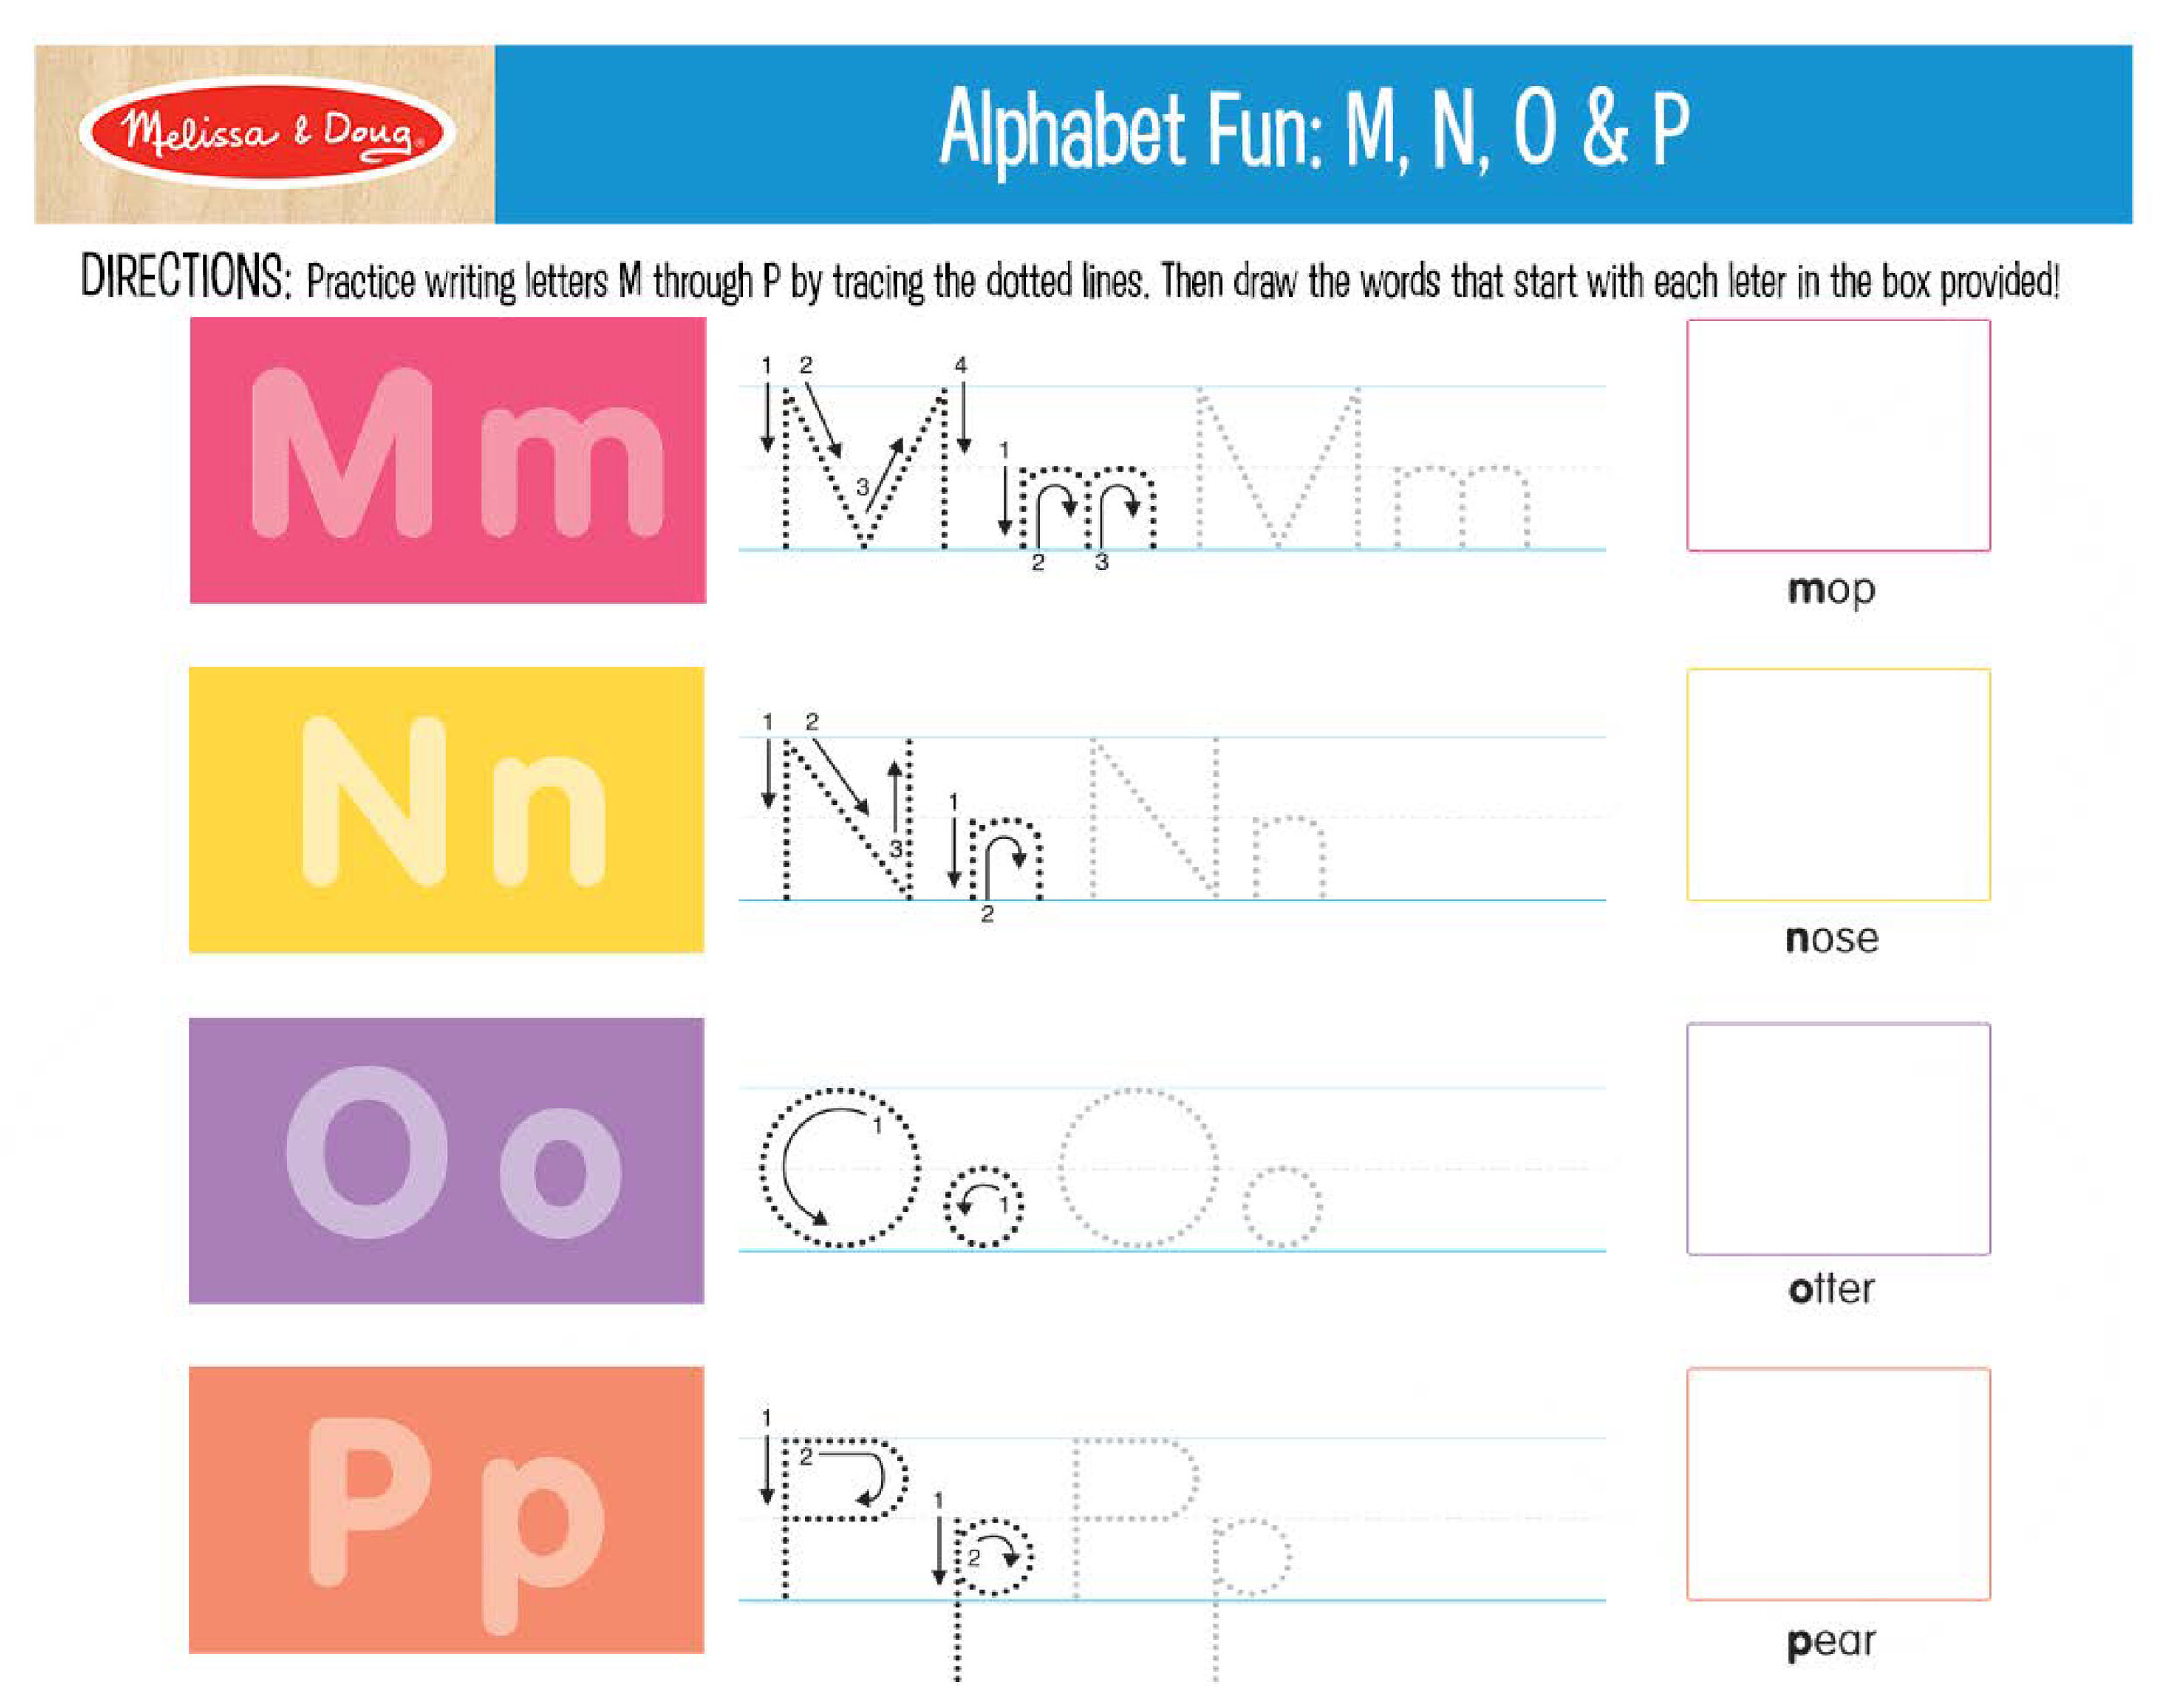 Printable_AlphabetFun-MNOP.jpg